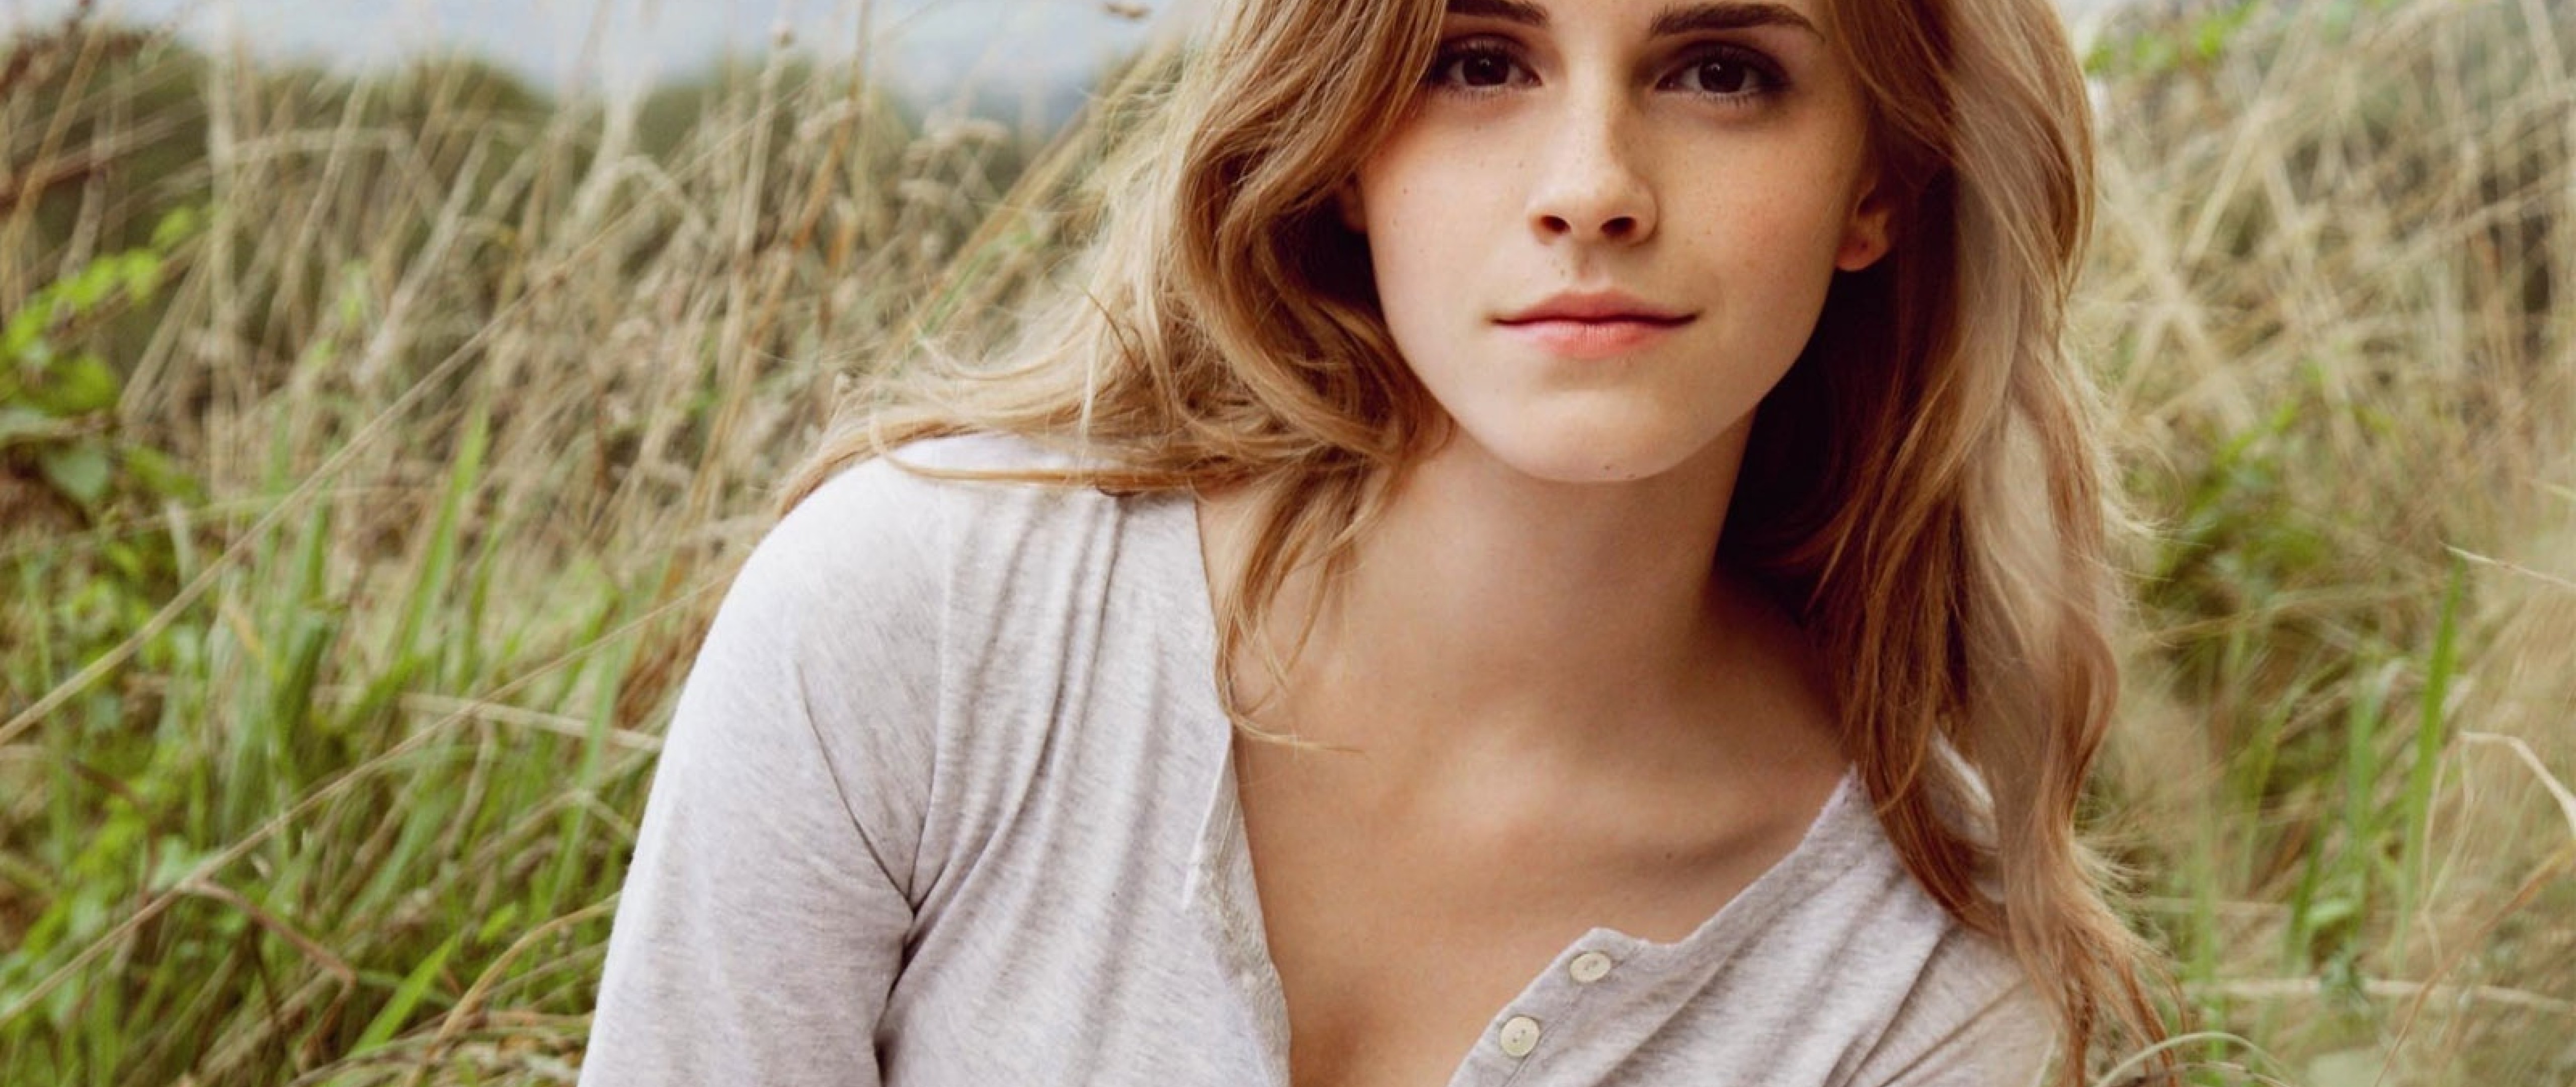 Download Emma Watson Hot Hd Wallpaper for Desktop and ...